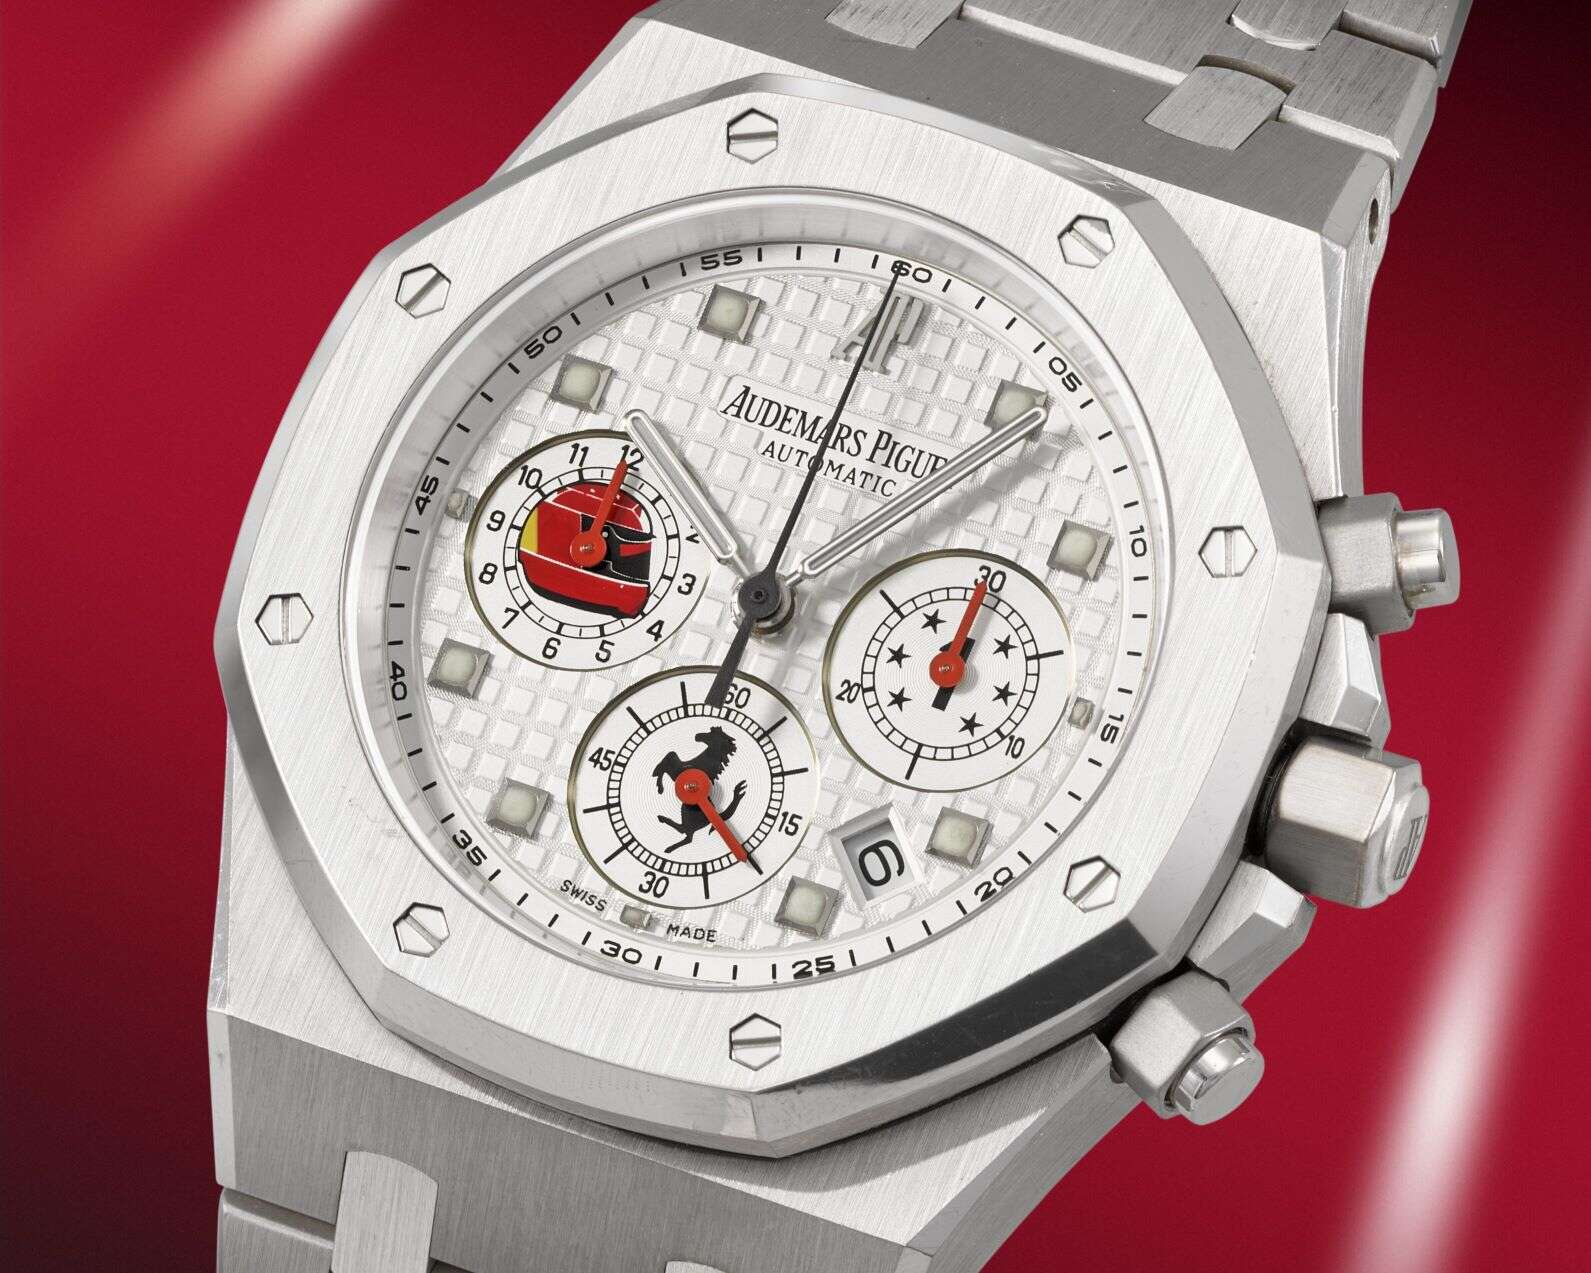 Christie’s to Auction Michael Schumacher Watch Collection